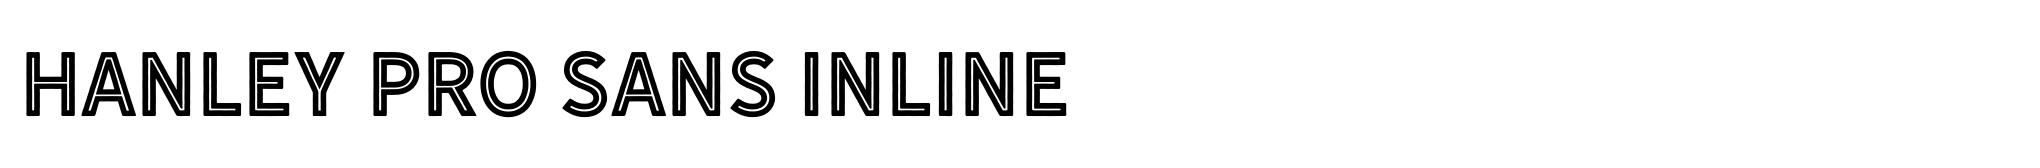 Hanley Pro Sans Inline image